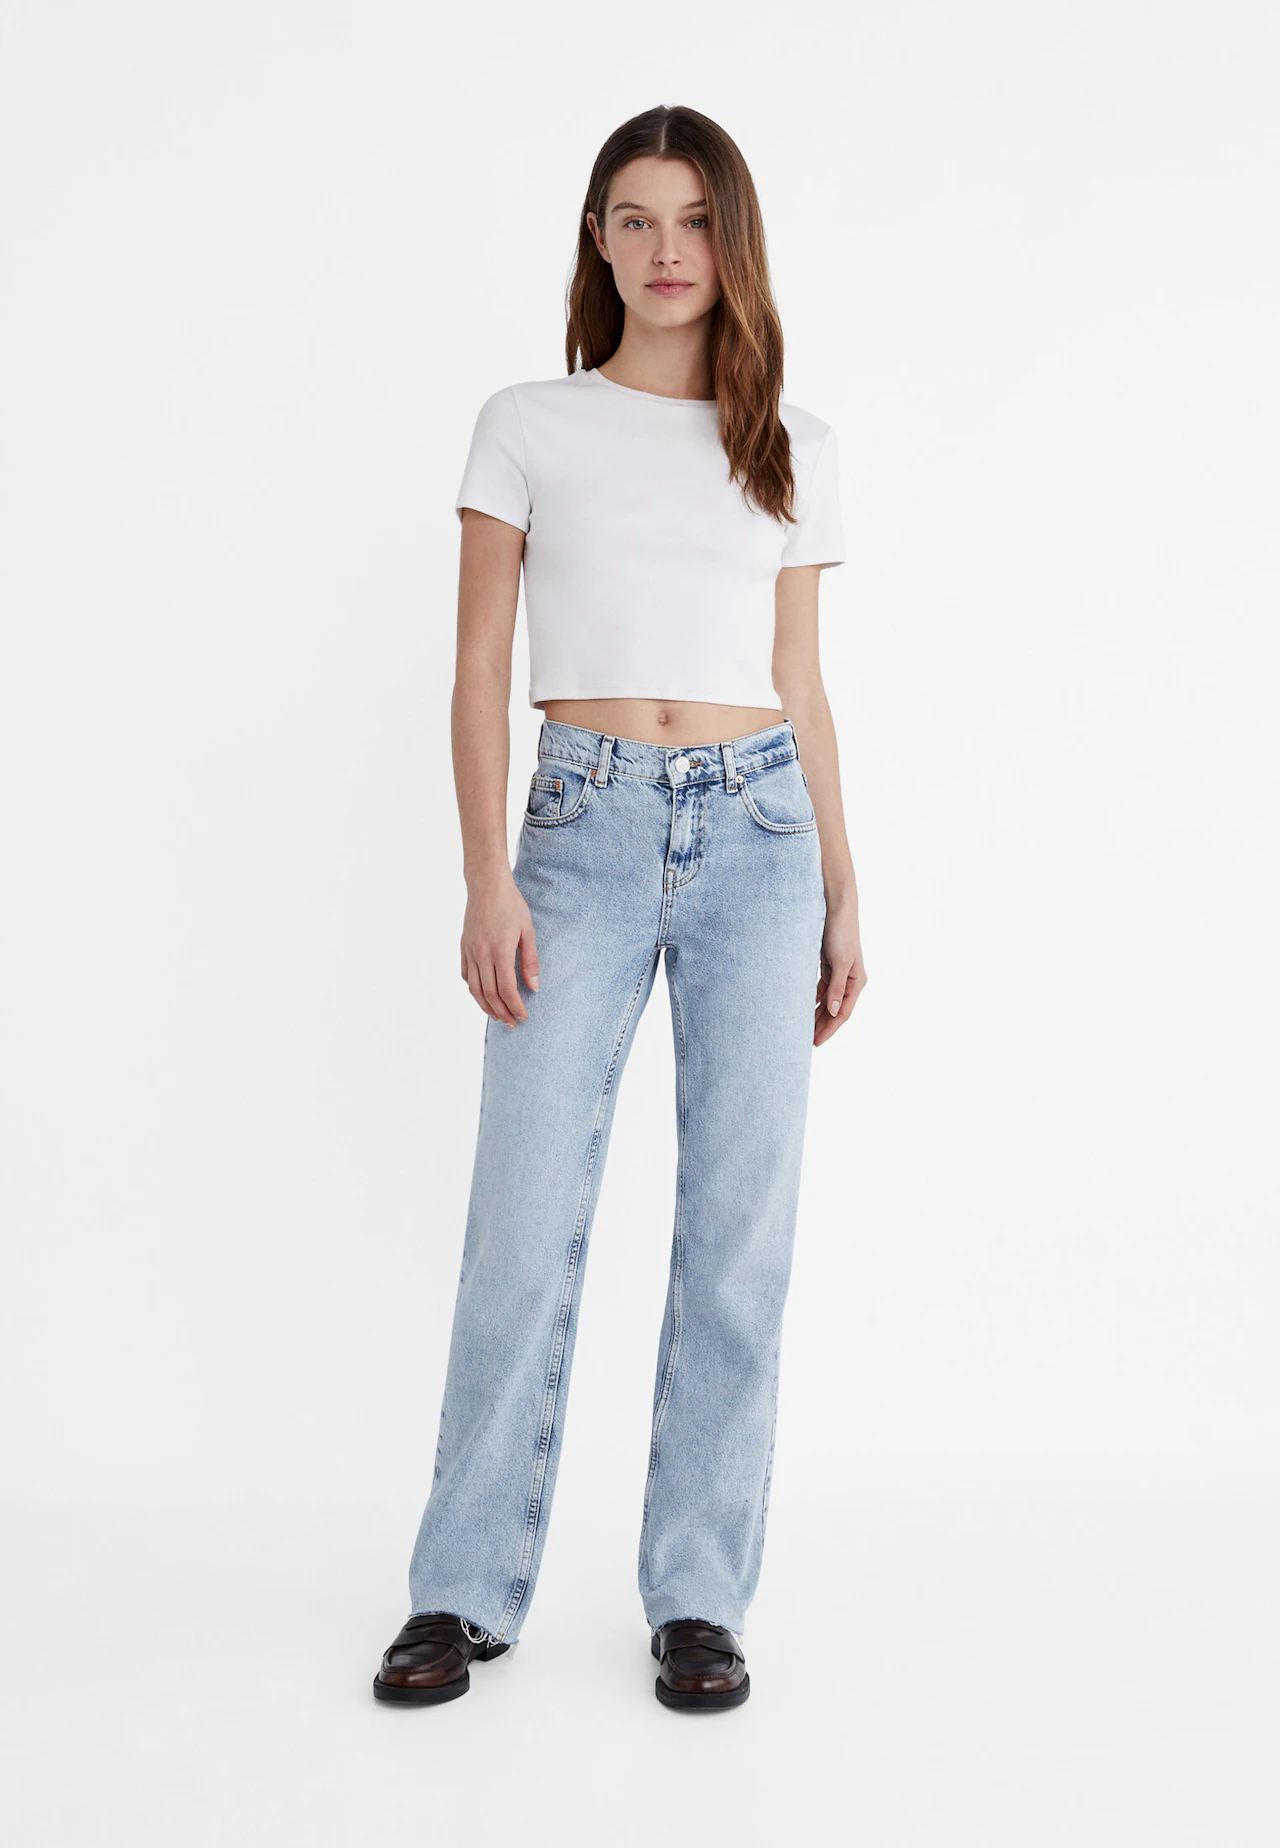 Low-cut straight fit jeans - Women's fashion